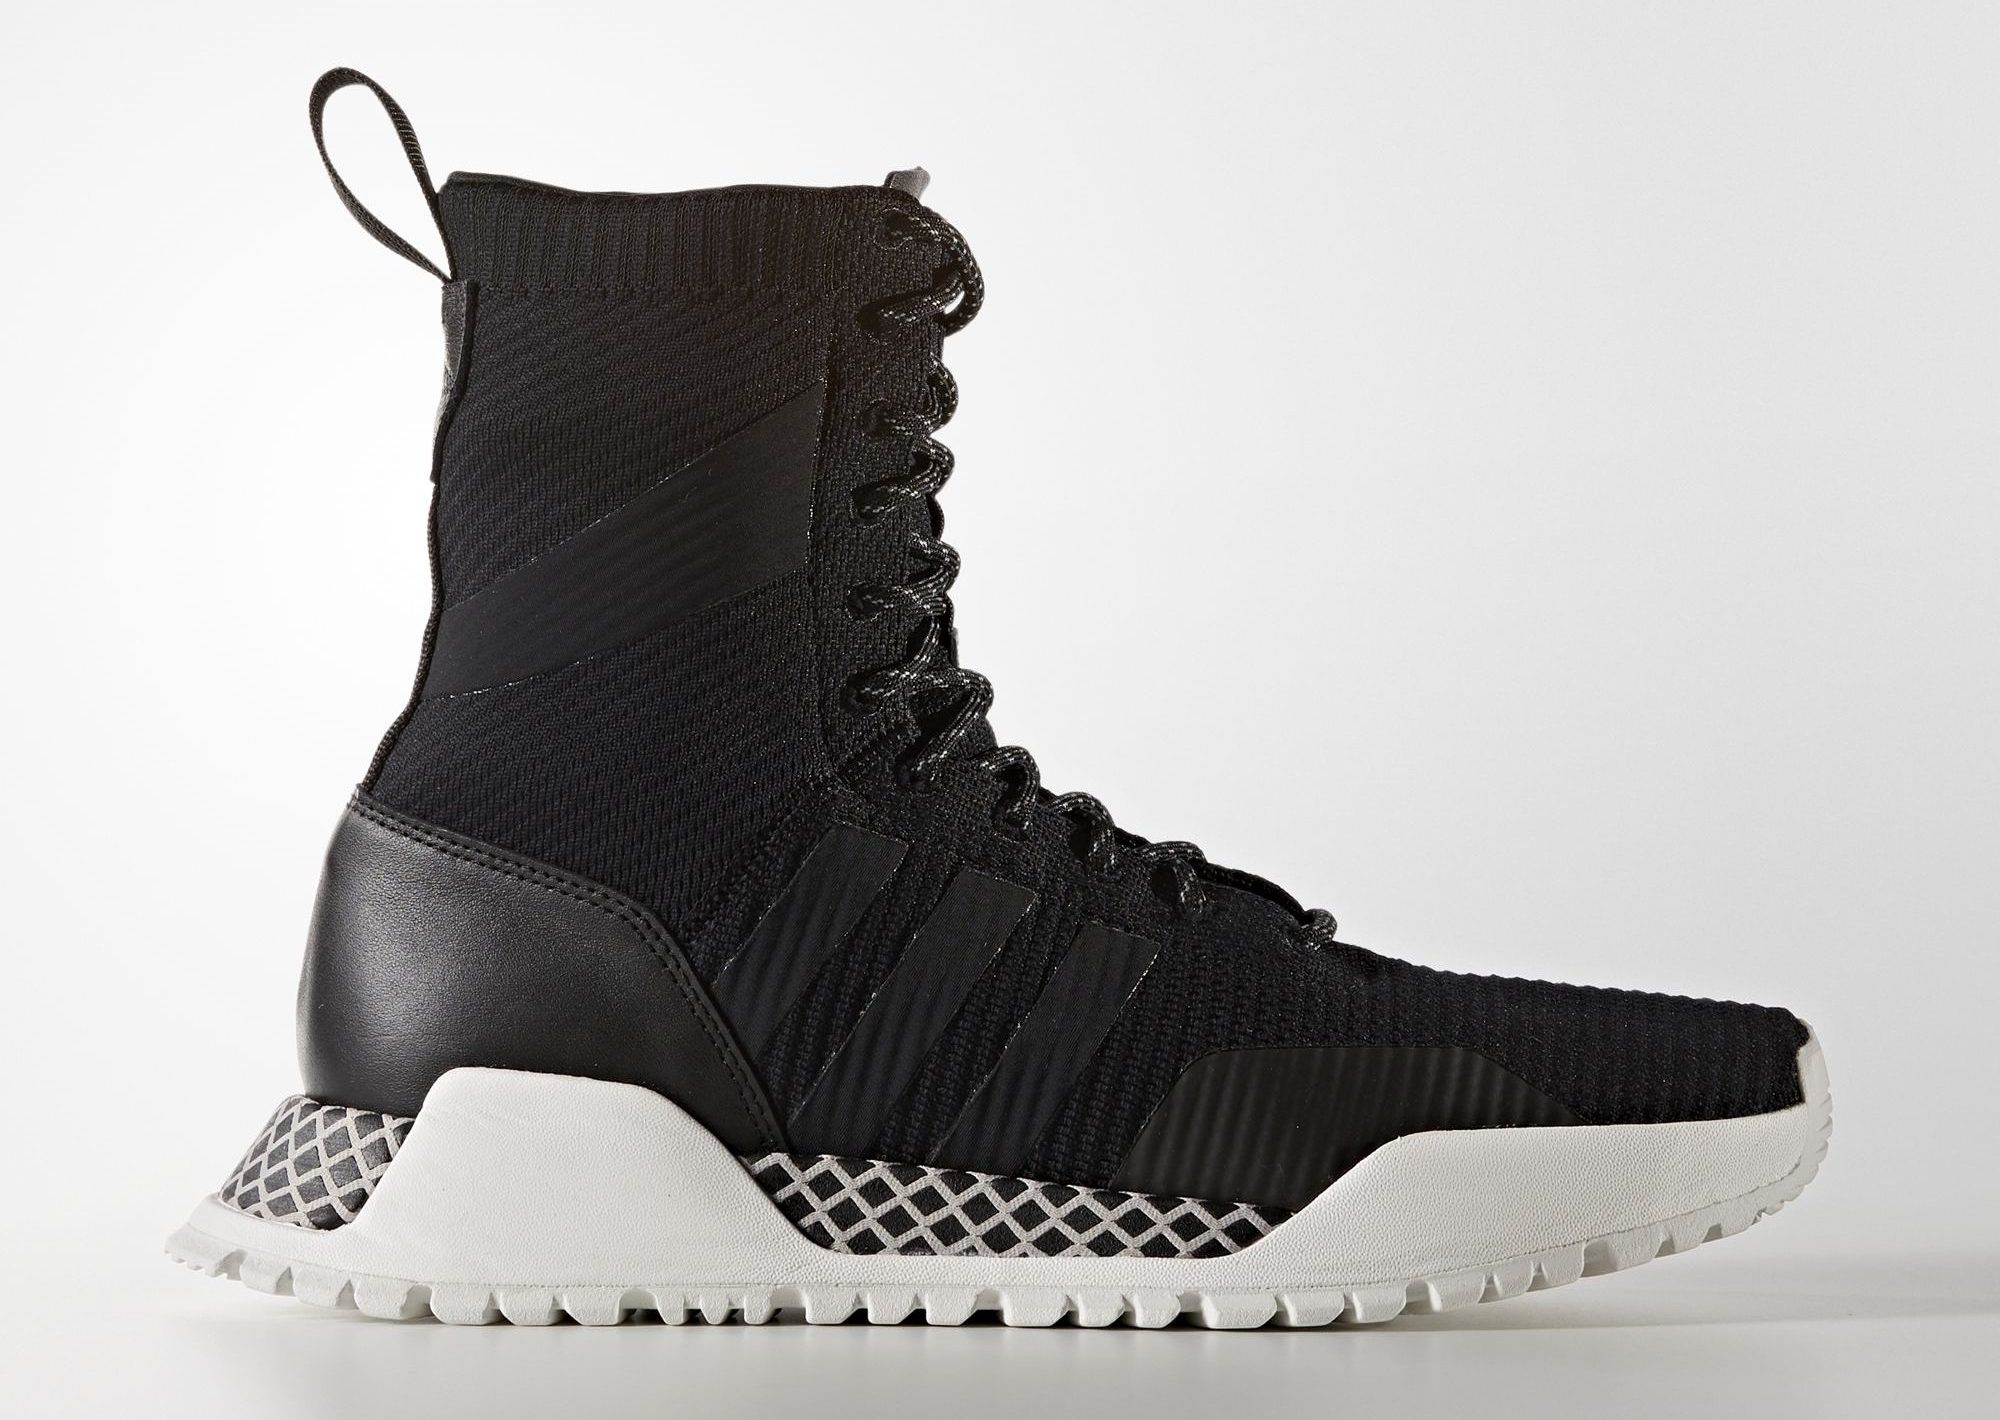 adidas' Primeknit Winter Boot, the AF 1 